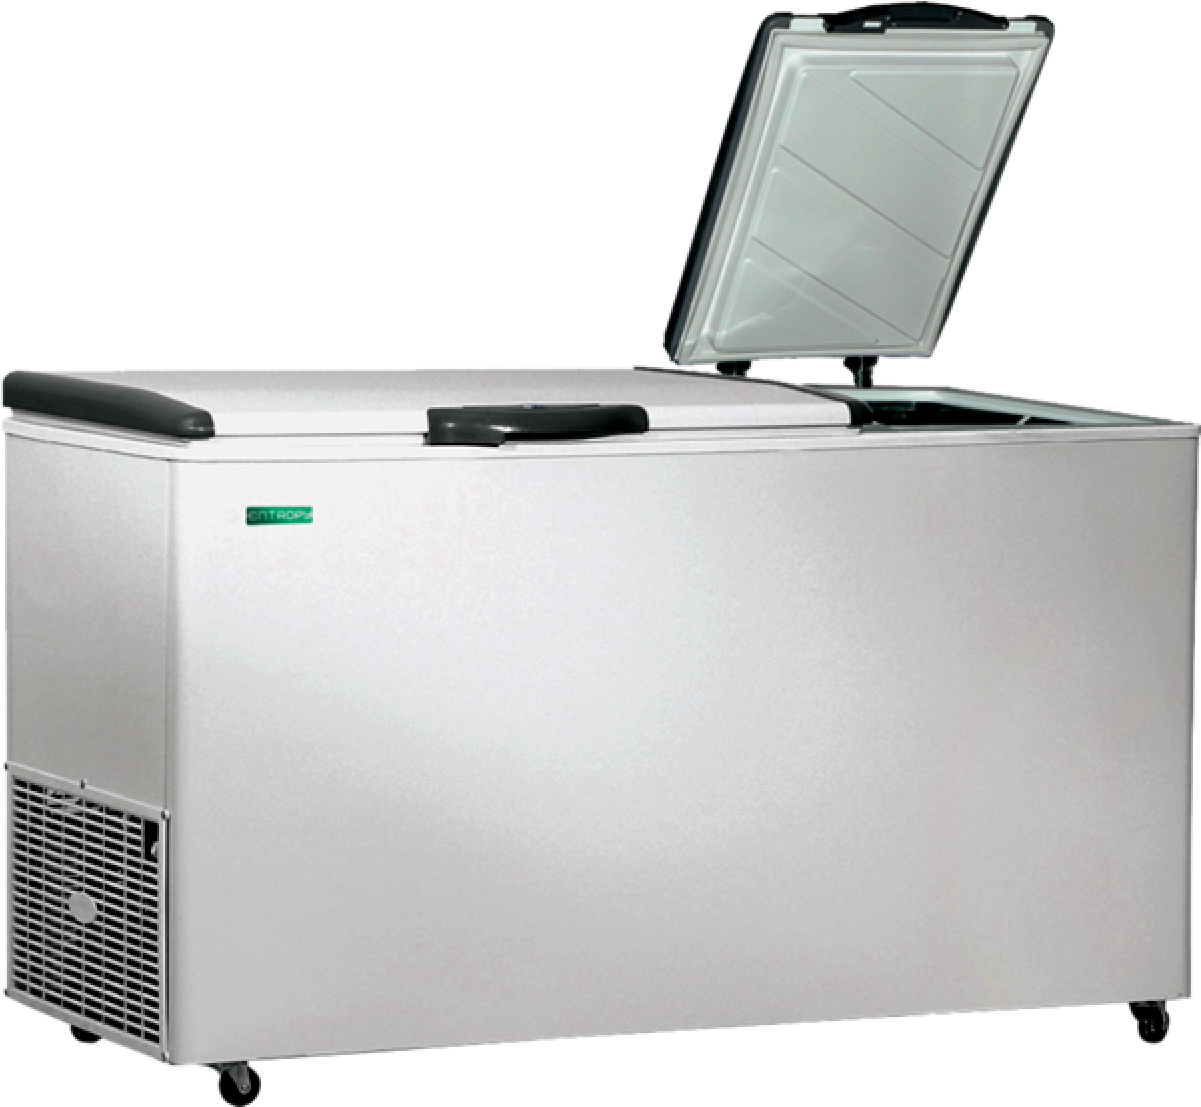 Freezer Entropy 377 Lts Fh4100/ff41 2 Tapas - Computer Desk (1200x1200)